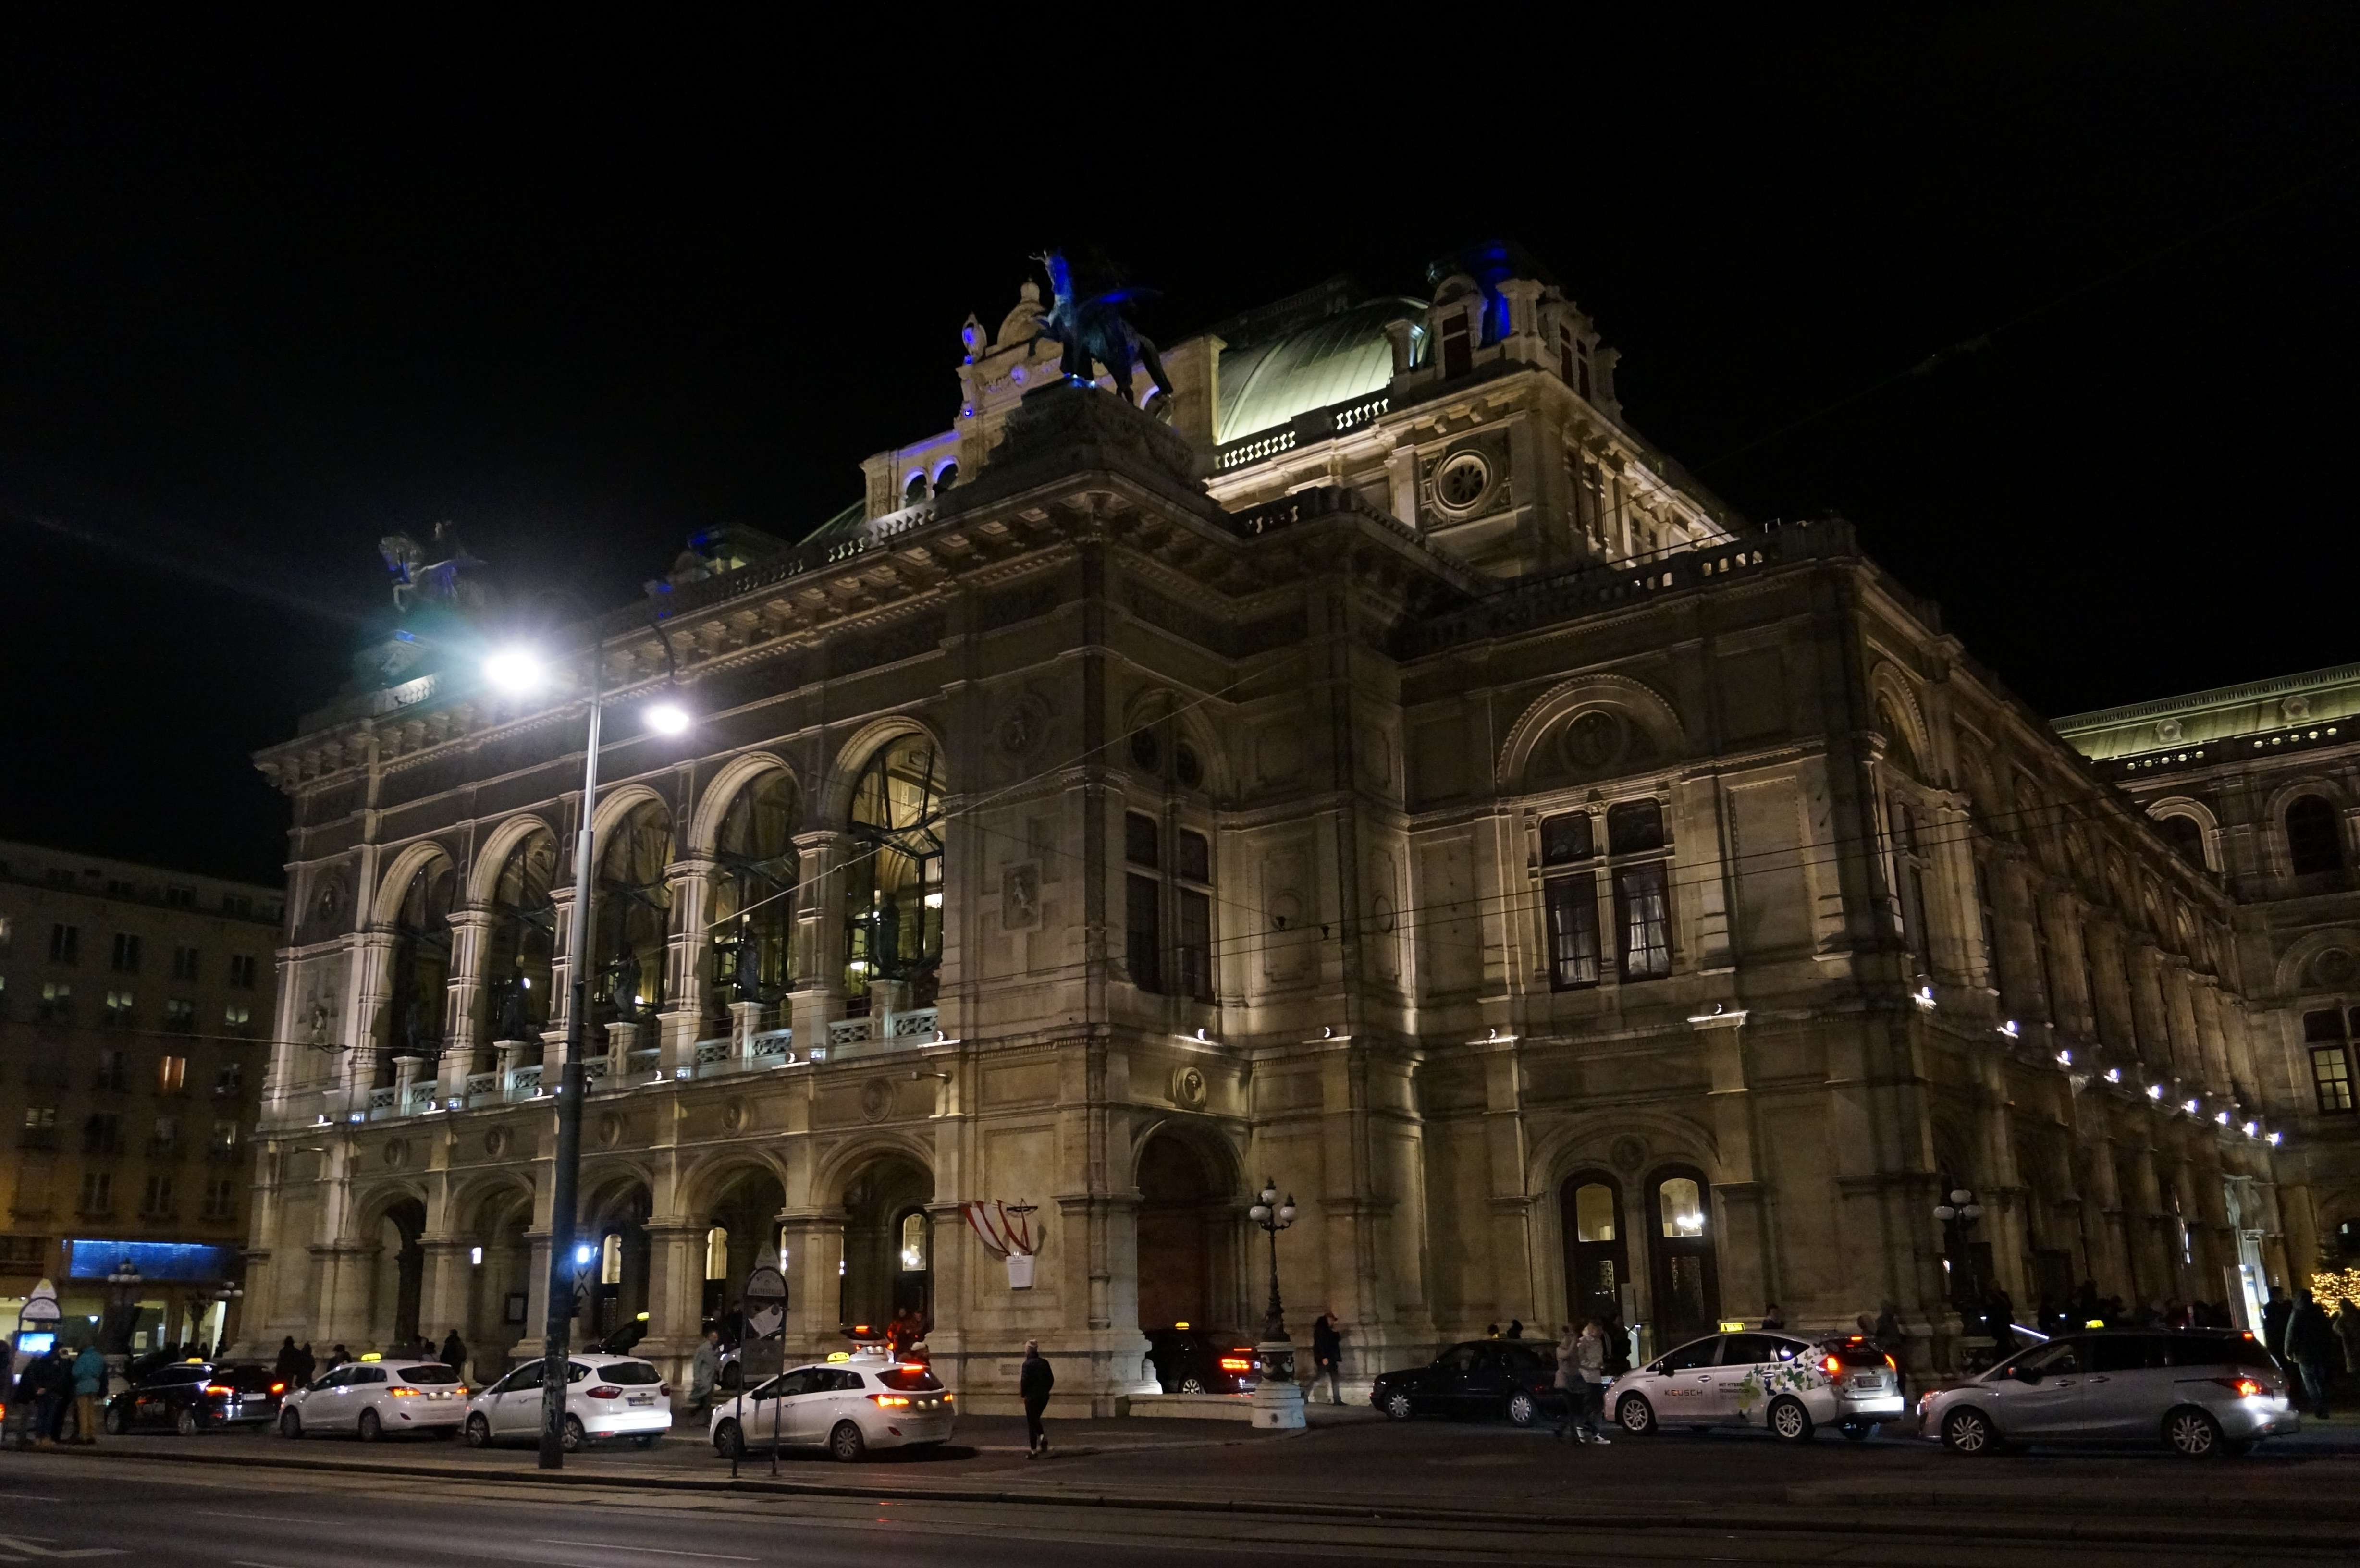 Praga, Viena y Budapest en 1 semana: Diciembre de luces e historia - Blogs de Europa Este - Dia 3 - Viena: Centro Histótico y Ópera (8)